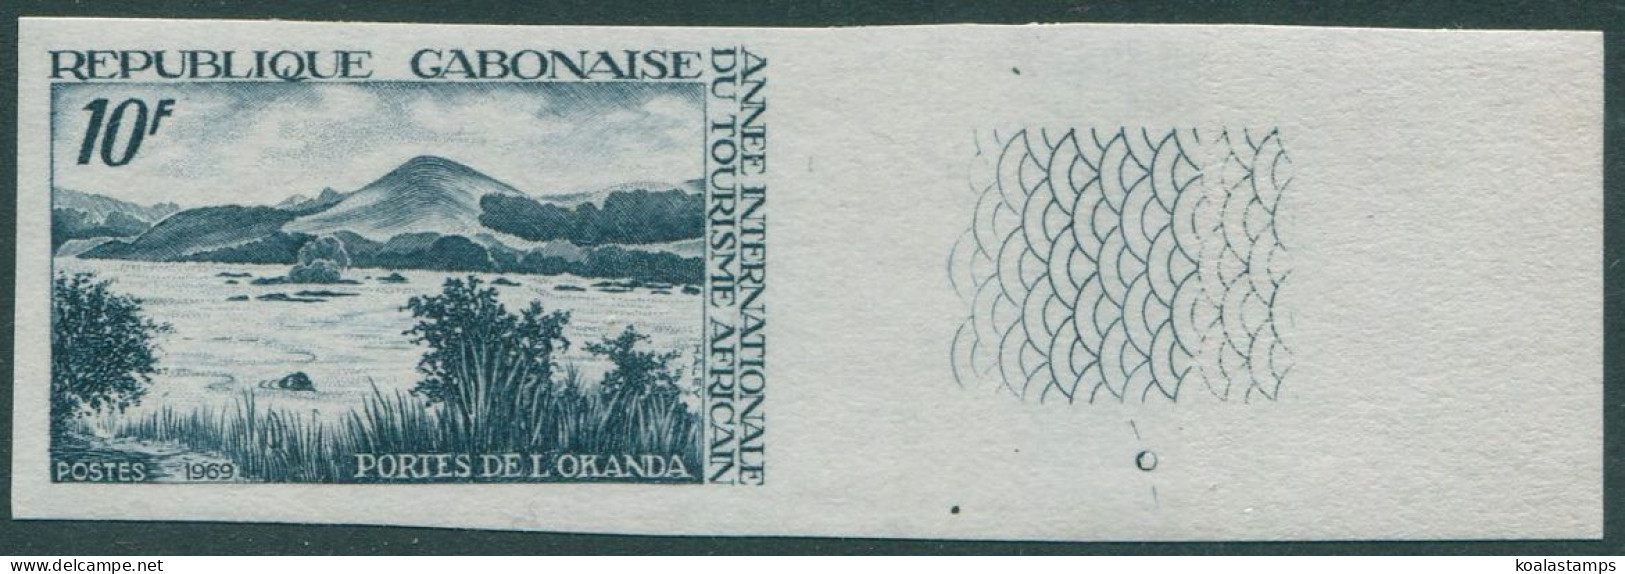 Gabon 1969 SG347 10f Portes De L'Akonda Imperf MNH - Gabon (1960-...)